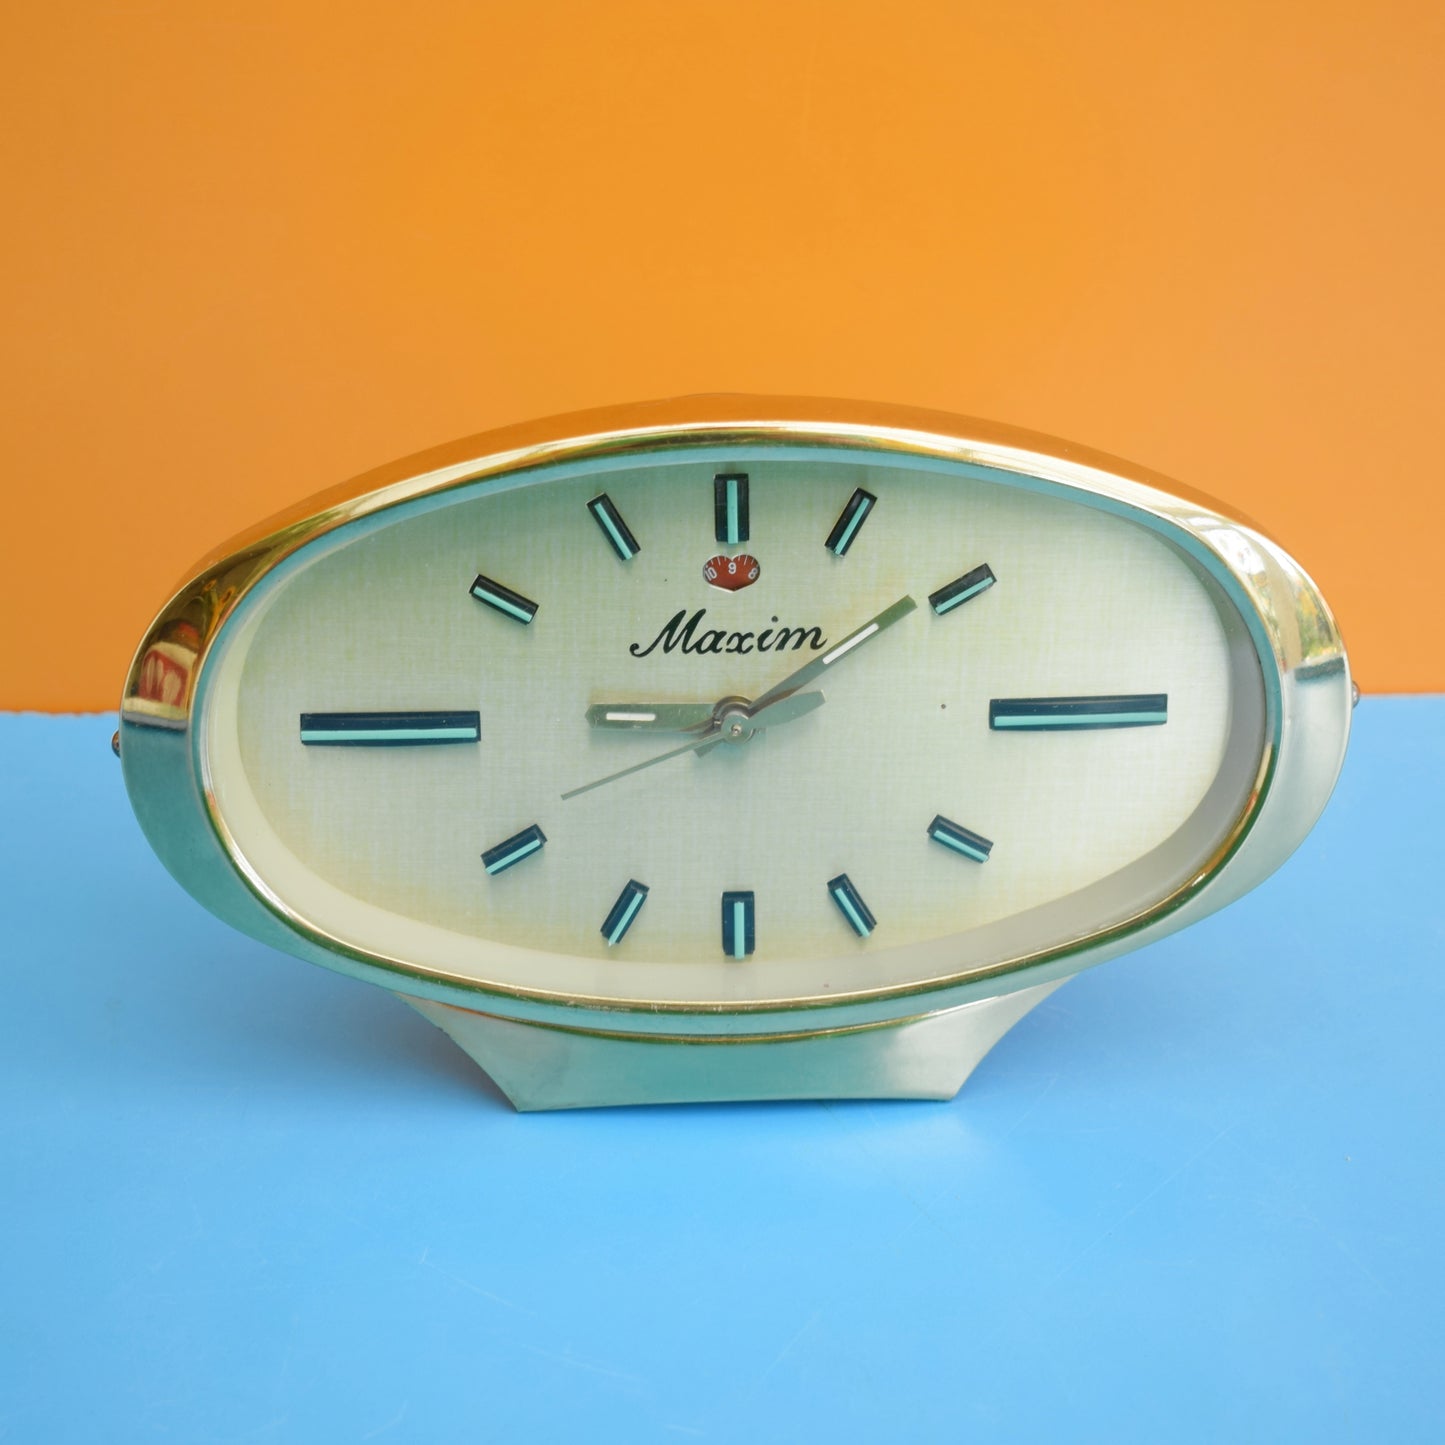 Vintage 1960s Maxim Alarm Clock - Golden